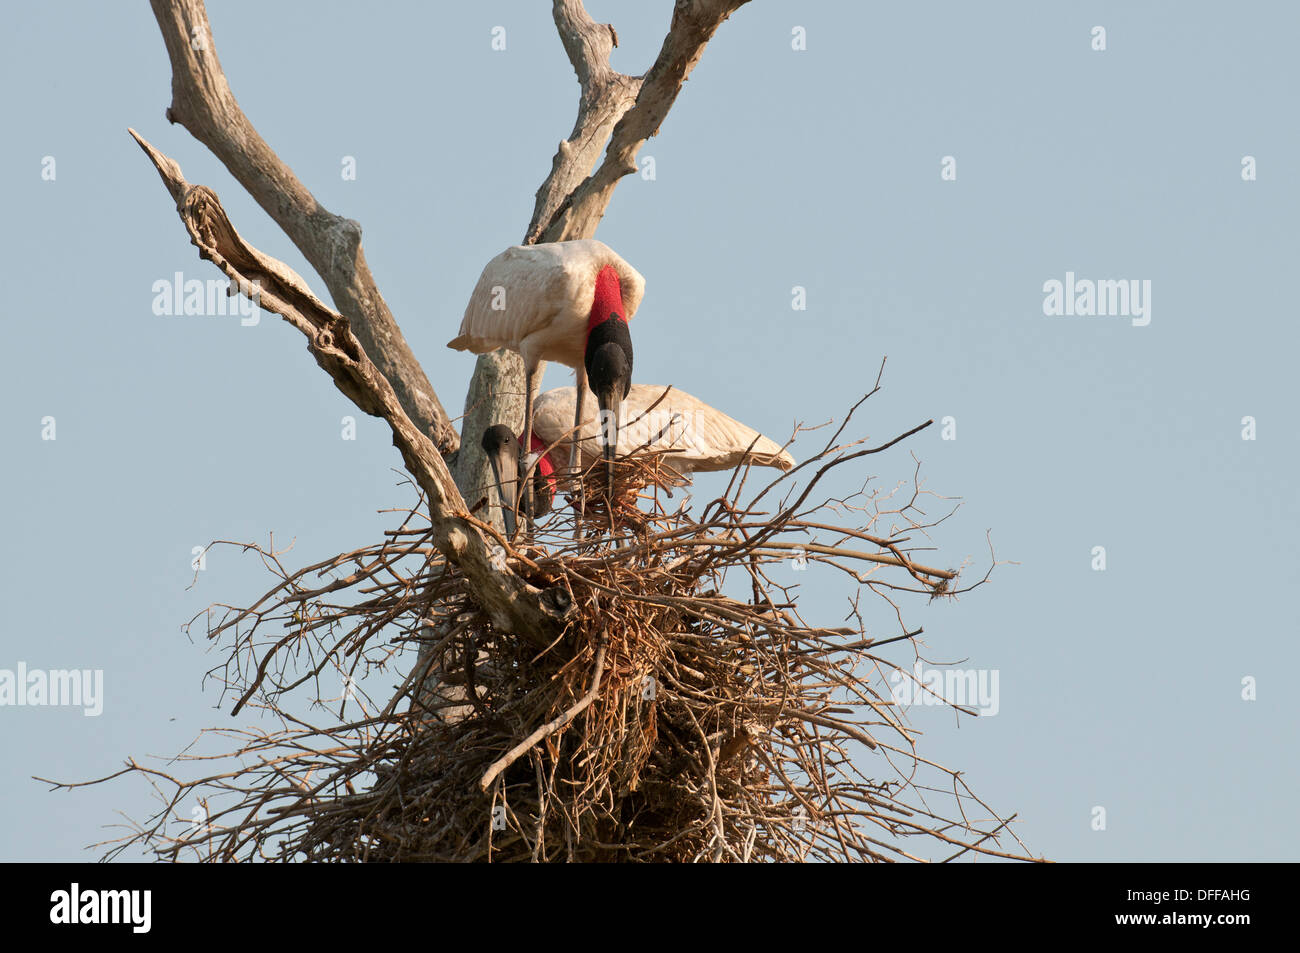 Stock photo of nesting jabiru storks, Pantanal, Brazil. Stock Photo